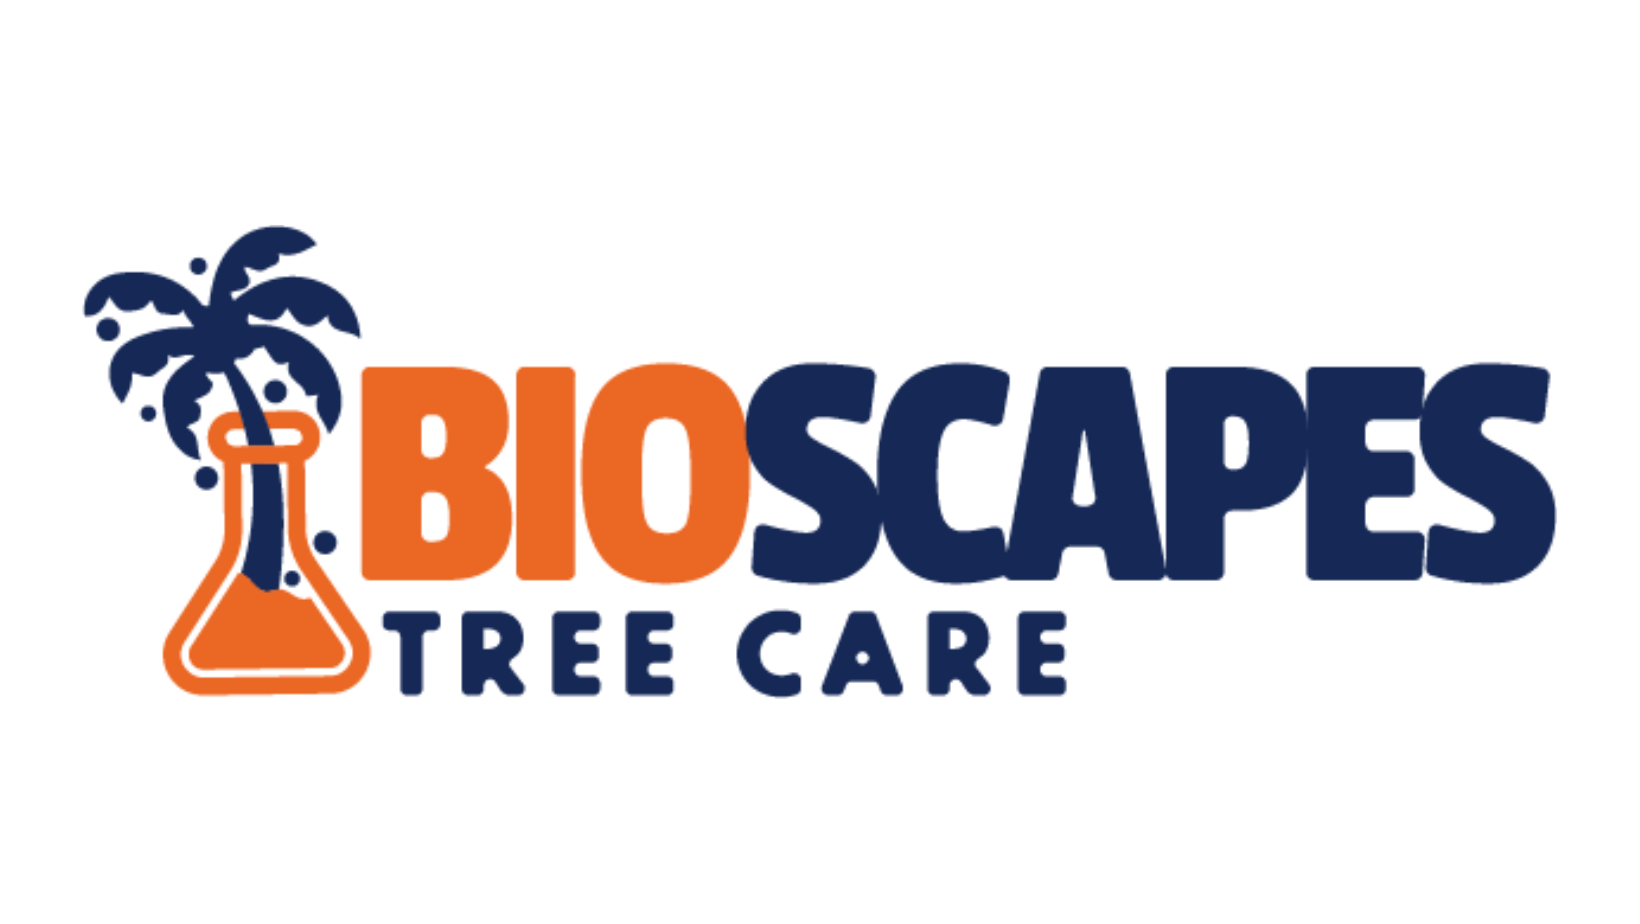 BioScapes Tree Care Inc's identification logo